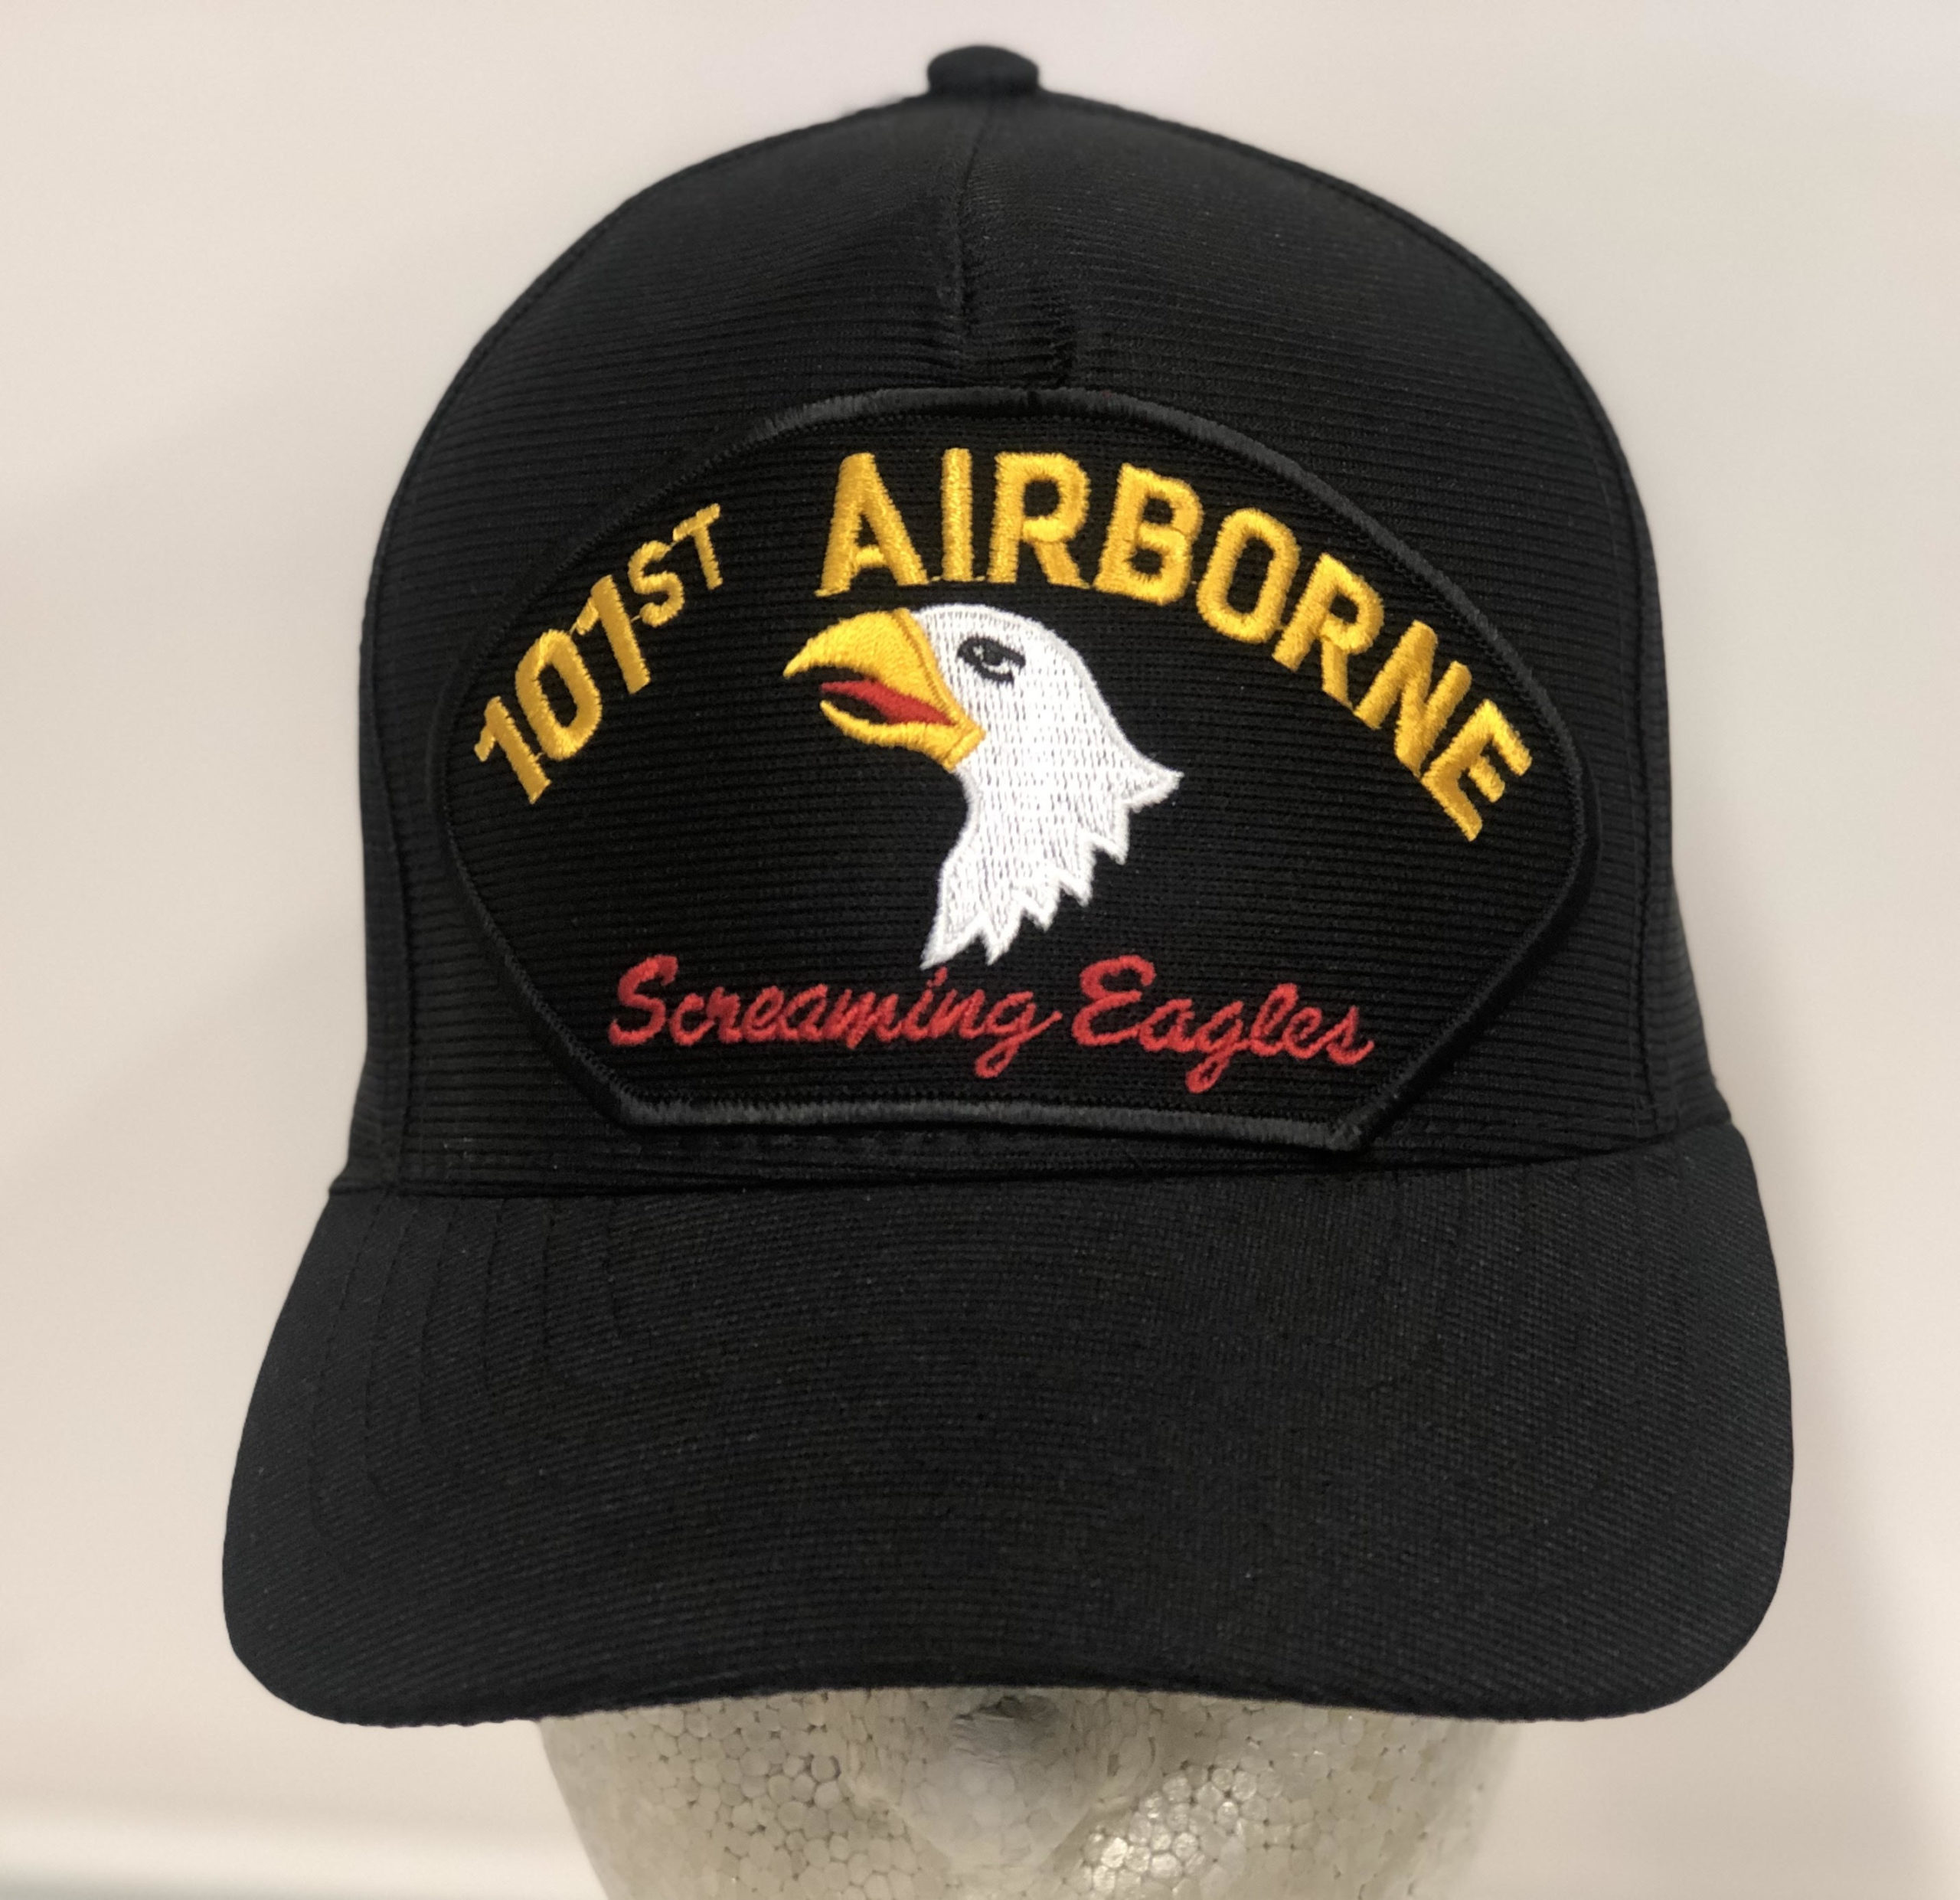 https://fortcampbell.com/wp-content/uploads/2021/01/101st-Airborne-Black-Hat-1-scaled-1.jpg